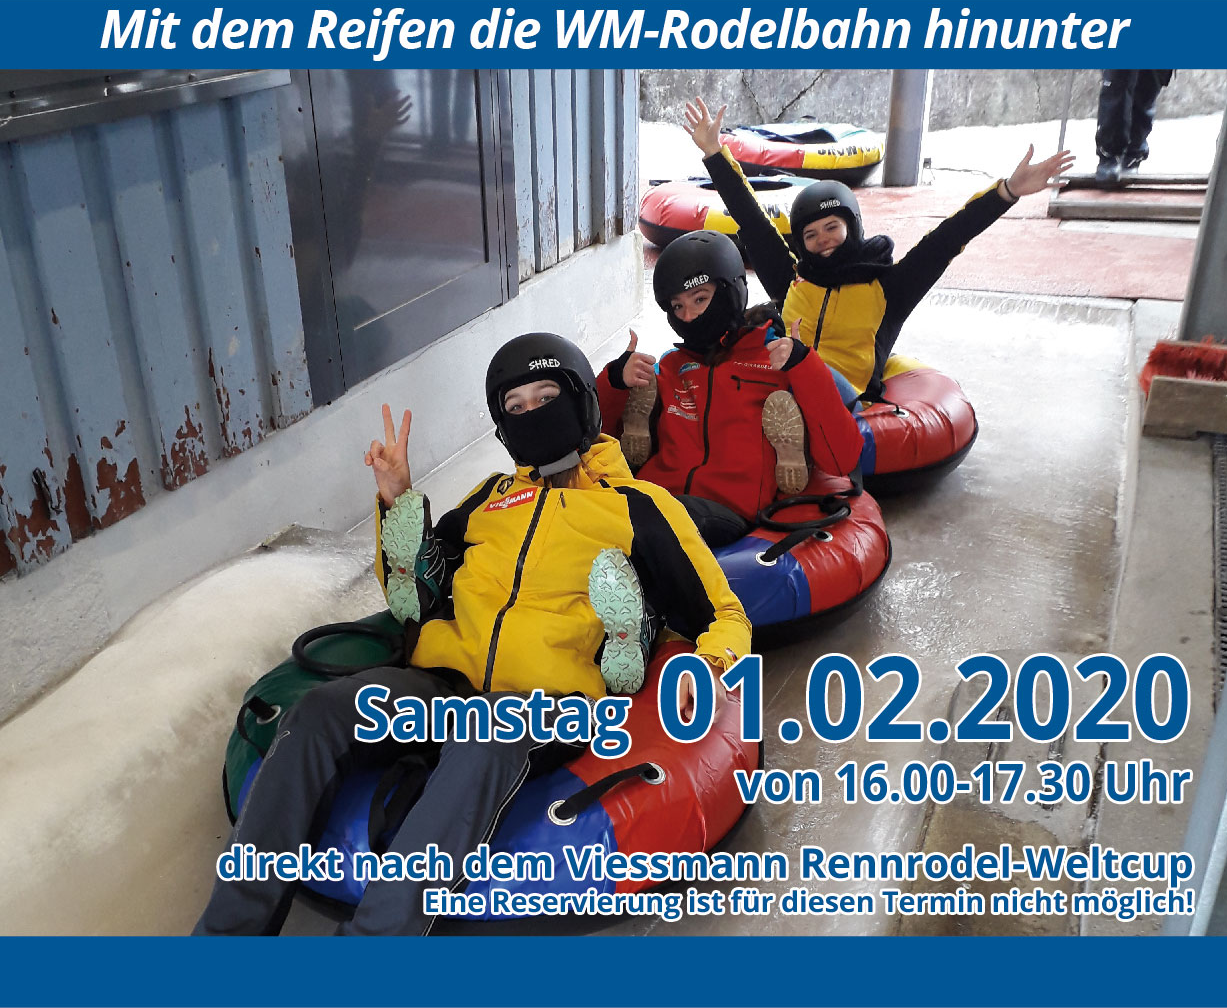 Icetubing Oberhof – Adrenalin Pur!